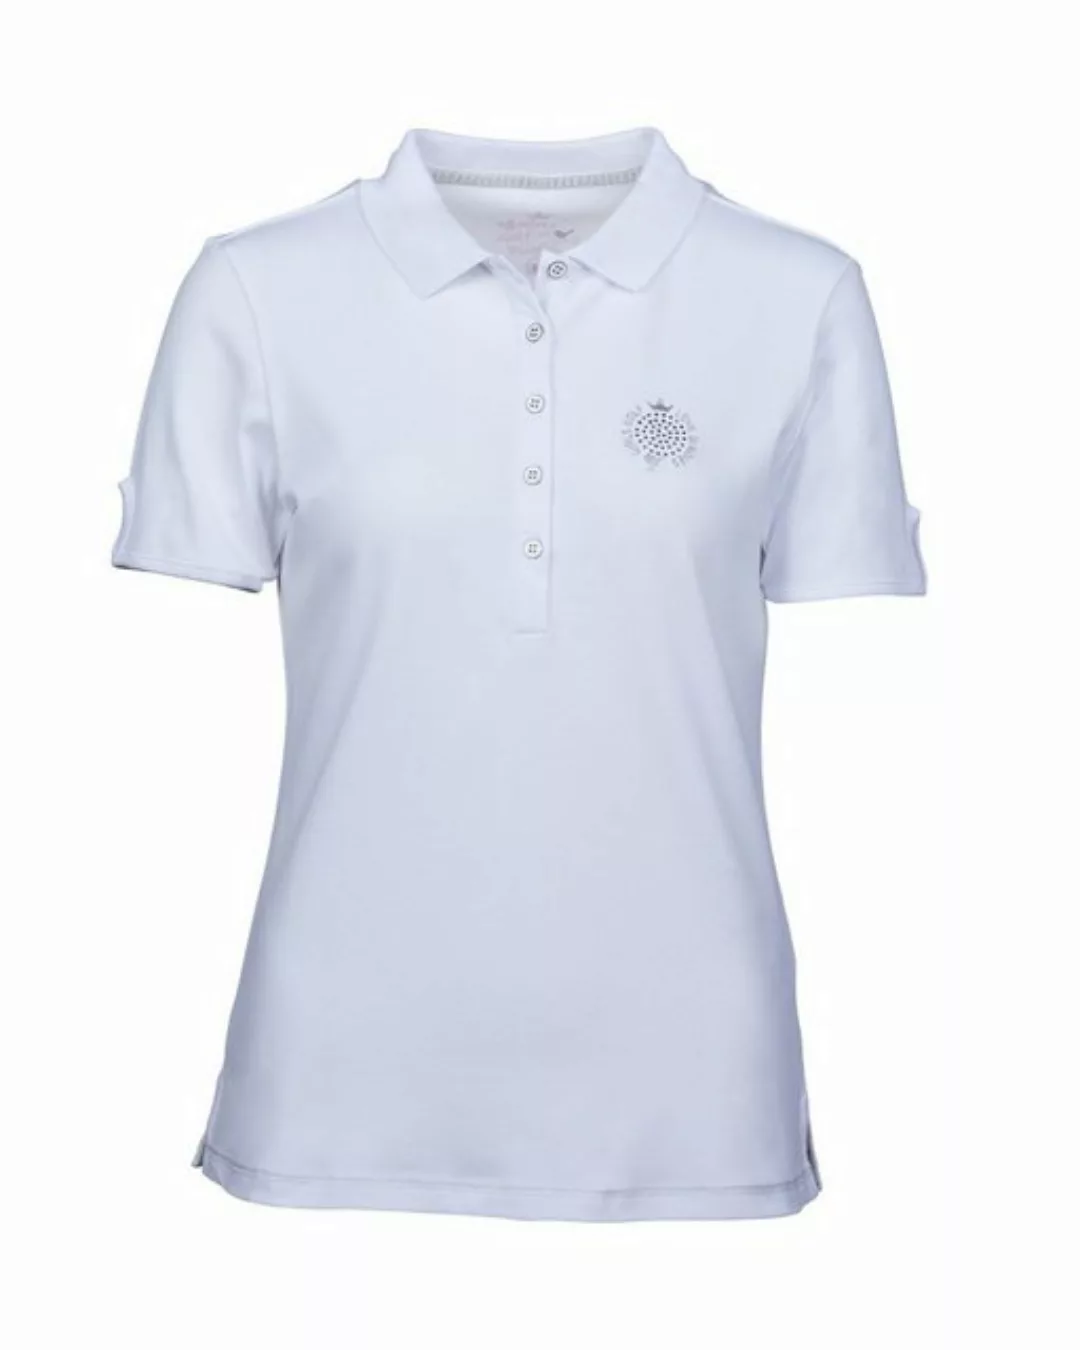 girls golf Poloshirt Girls Golf Polo 'Golf' Weiß Damen XL günstig online kaufen